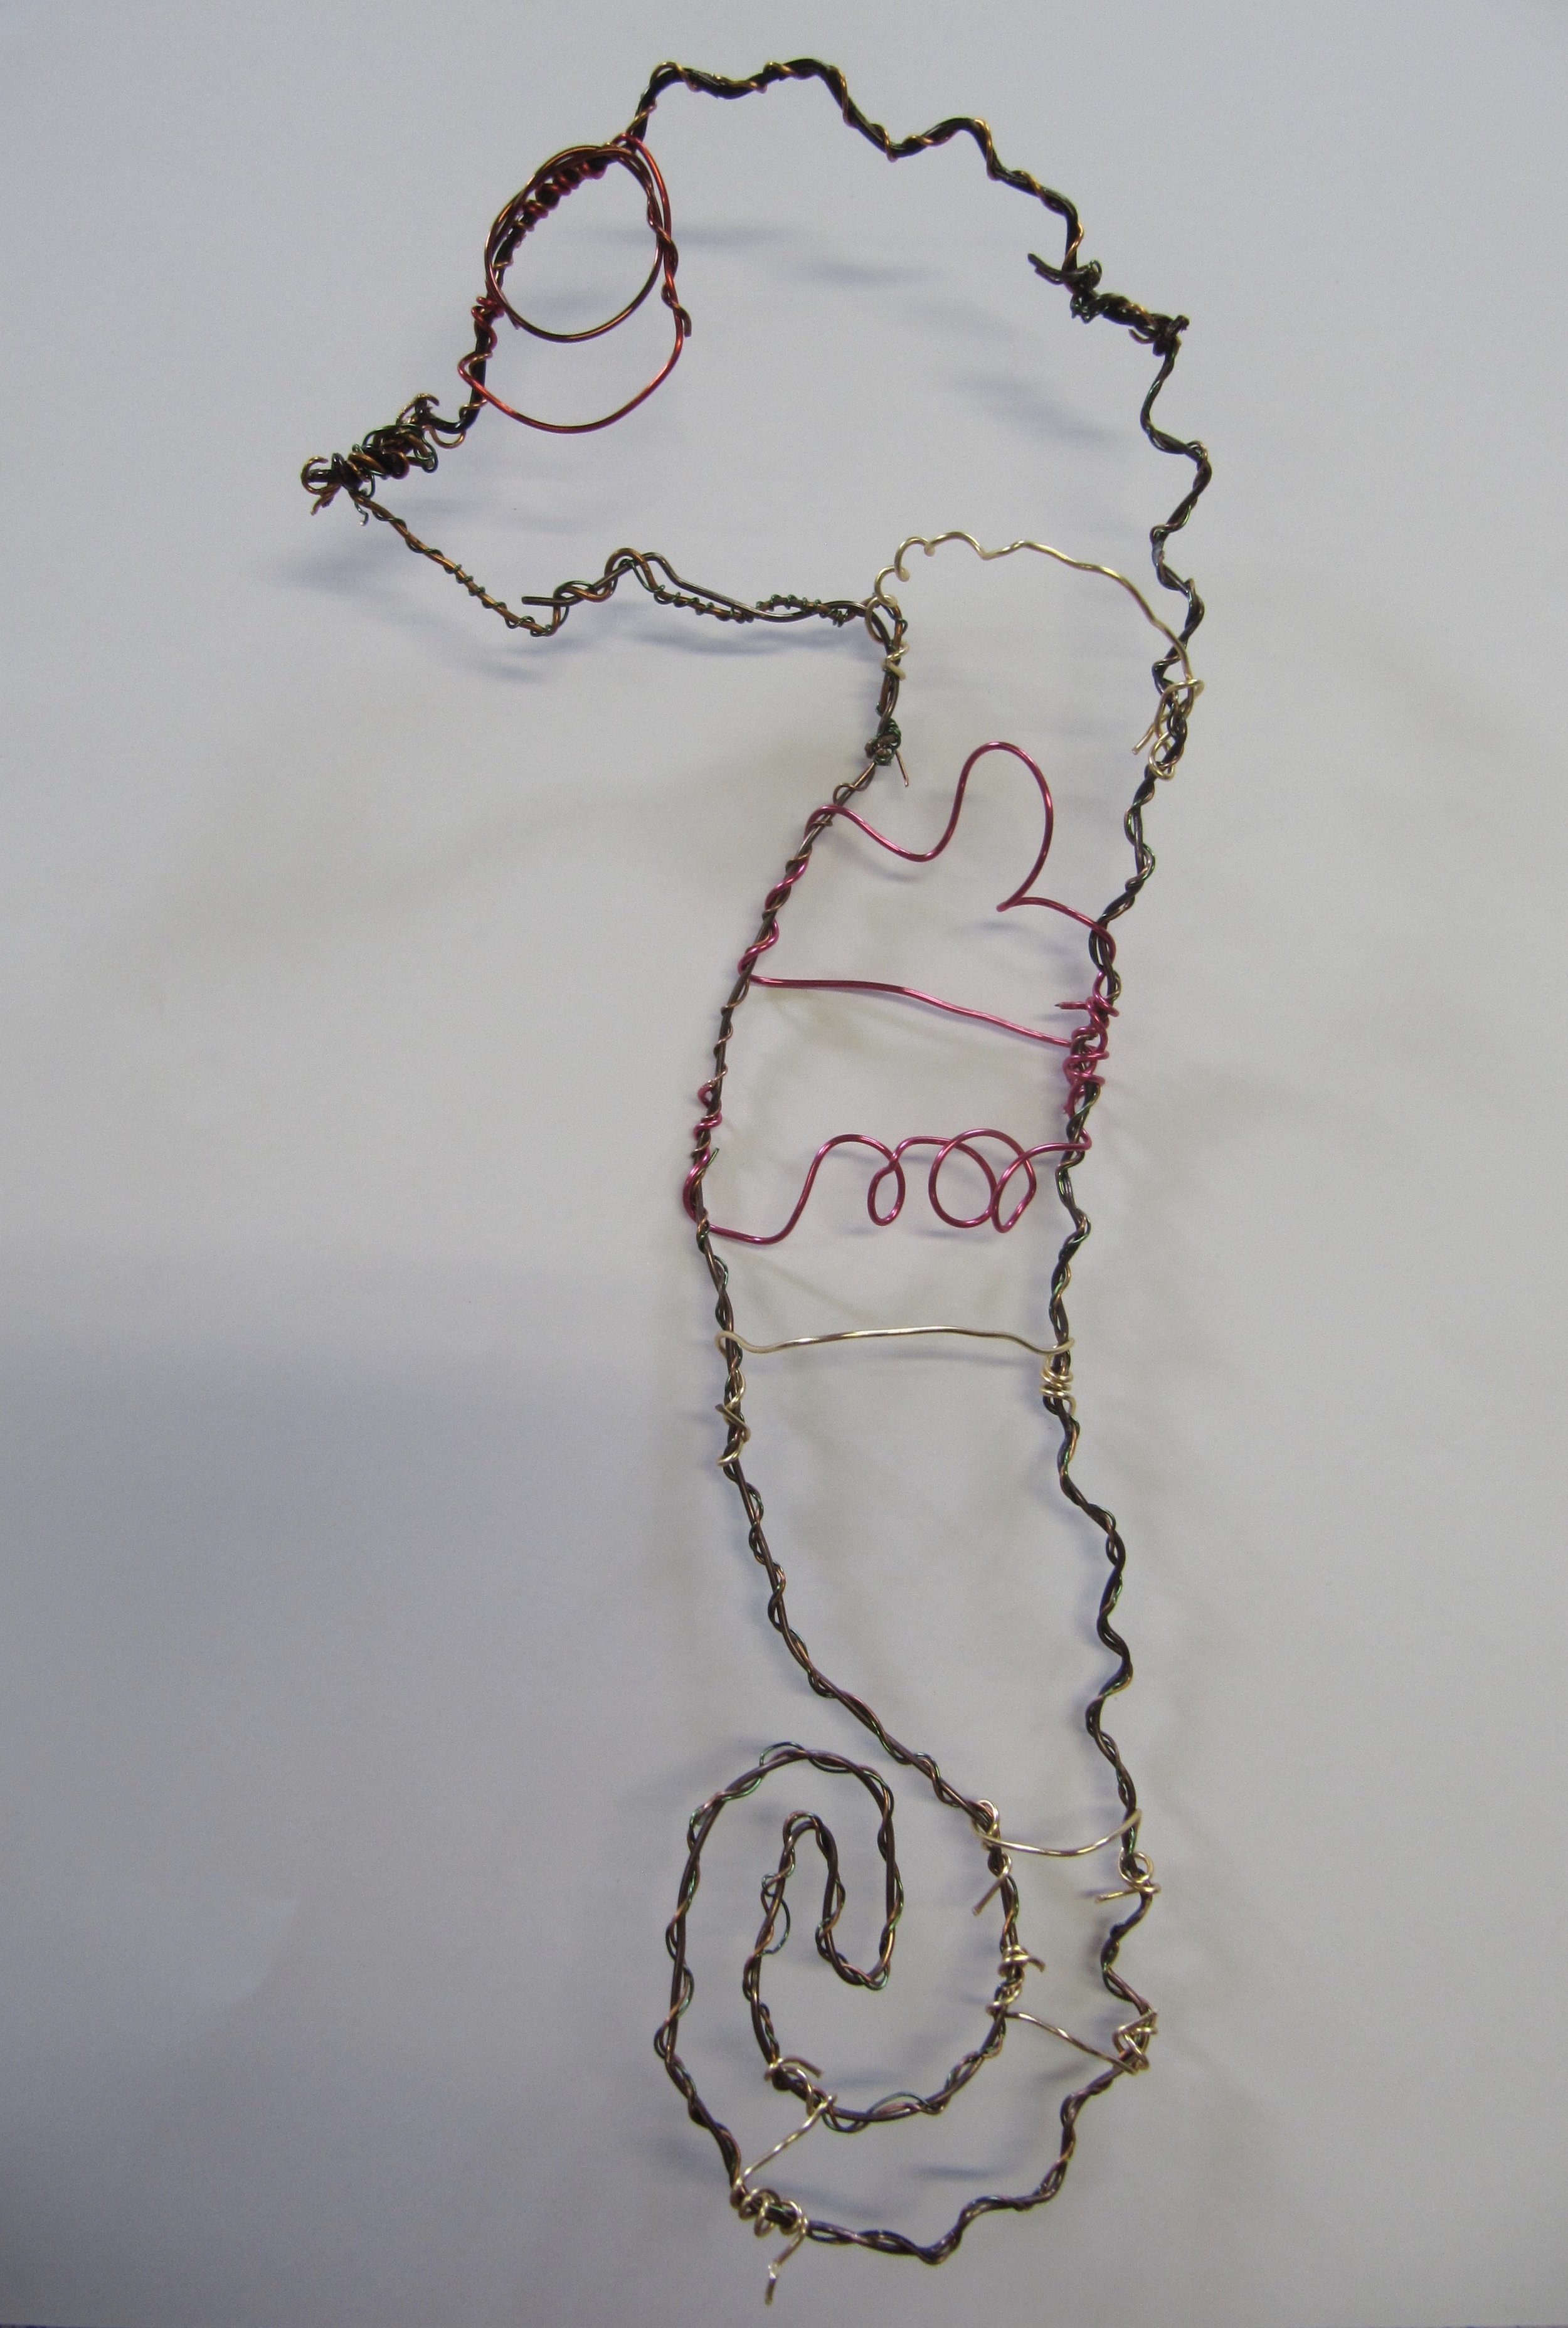 Wire Seahorse by Yr 7 pupil - Bishops Wordsworth School 